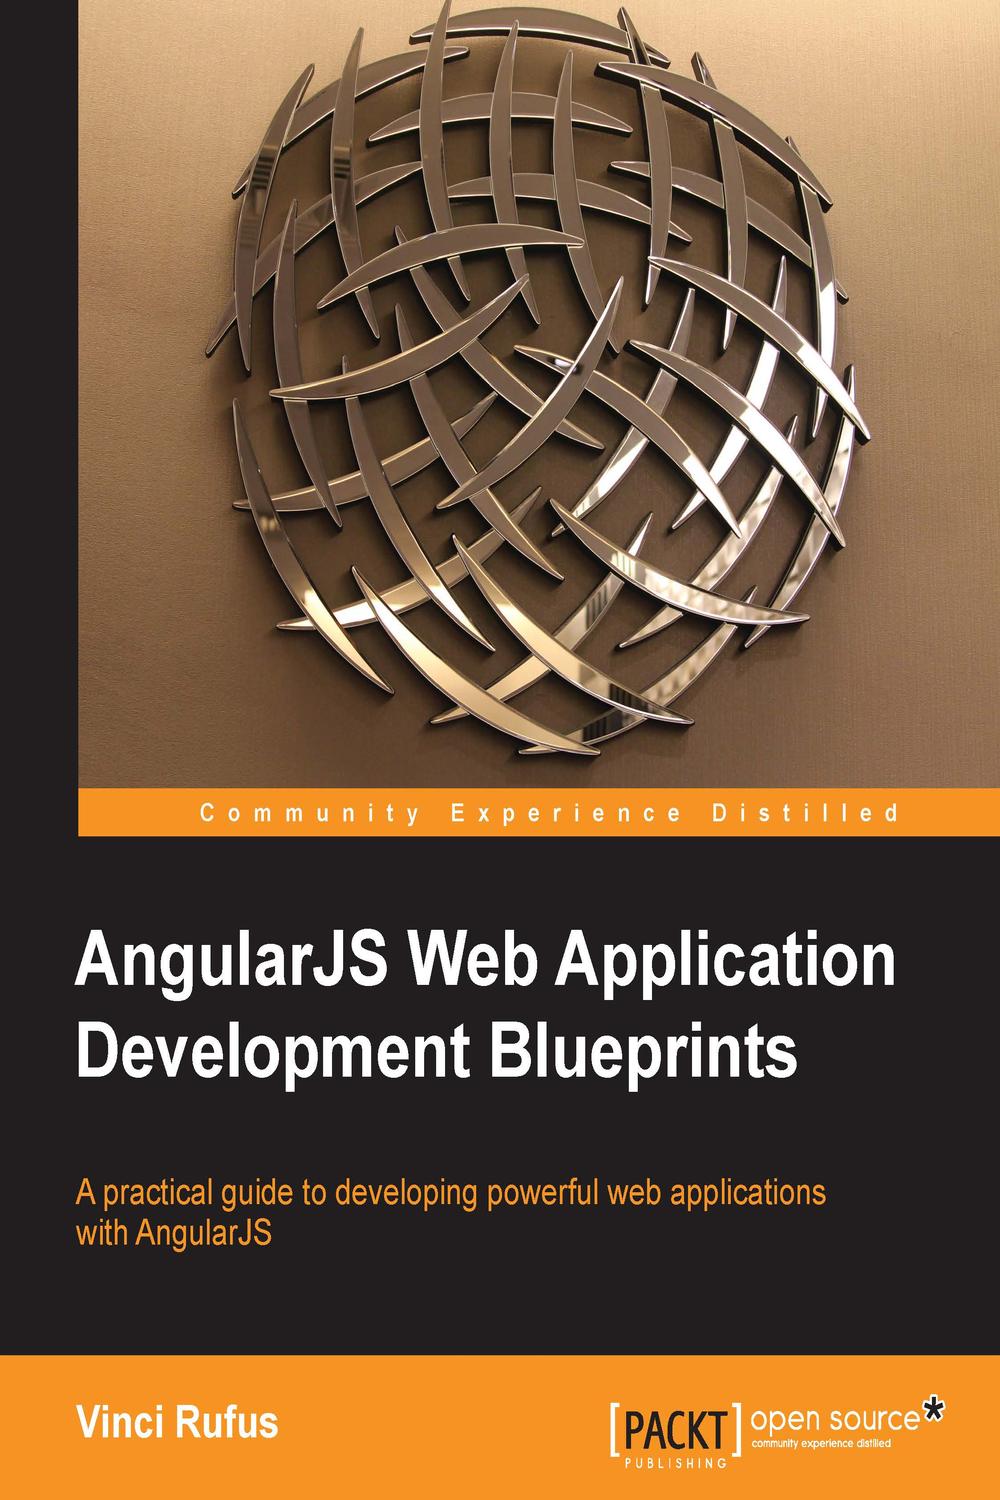 AngularJS Web Application Development Blueprints - Vinci Rufus